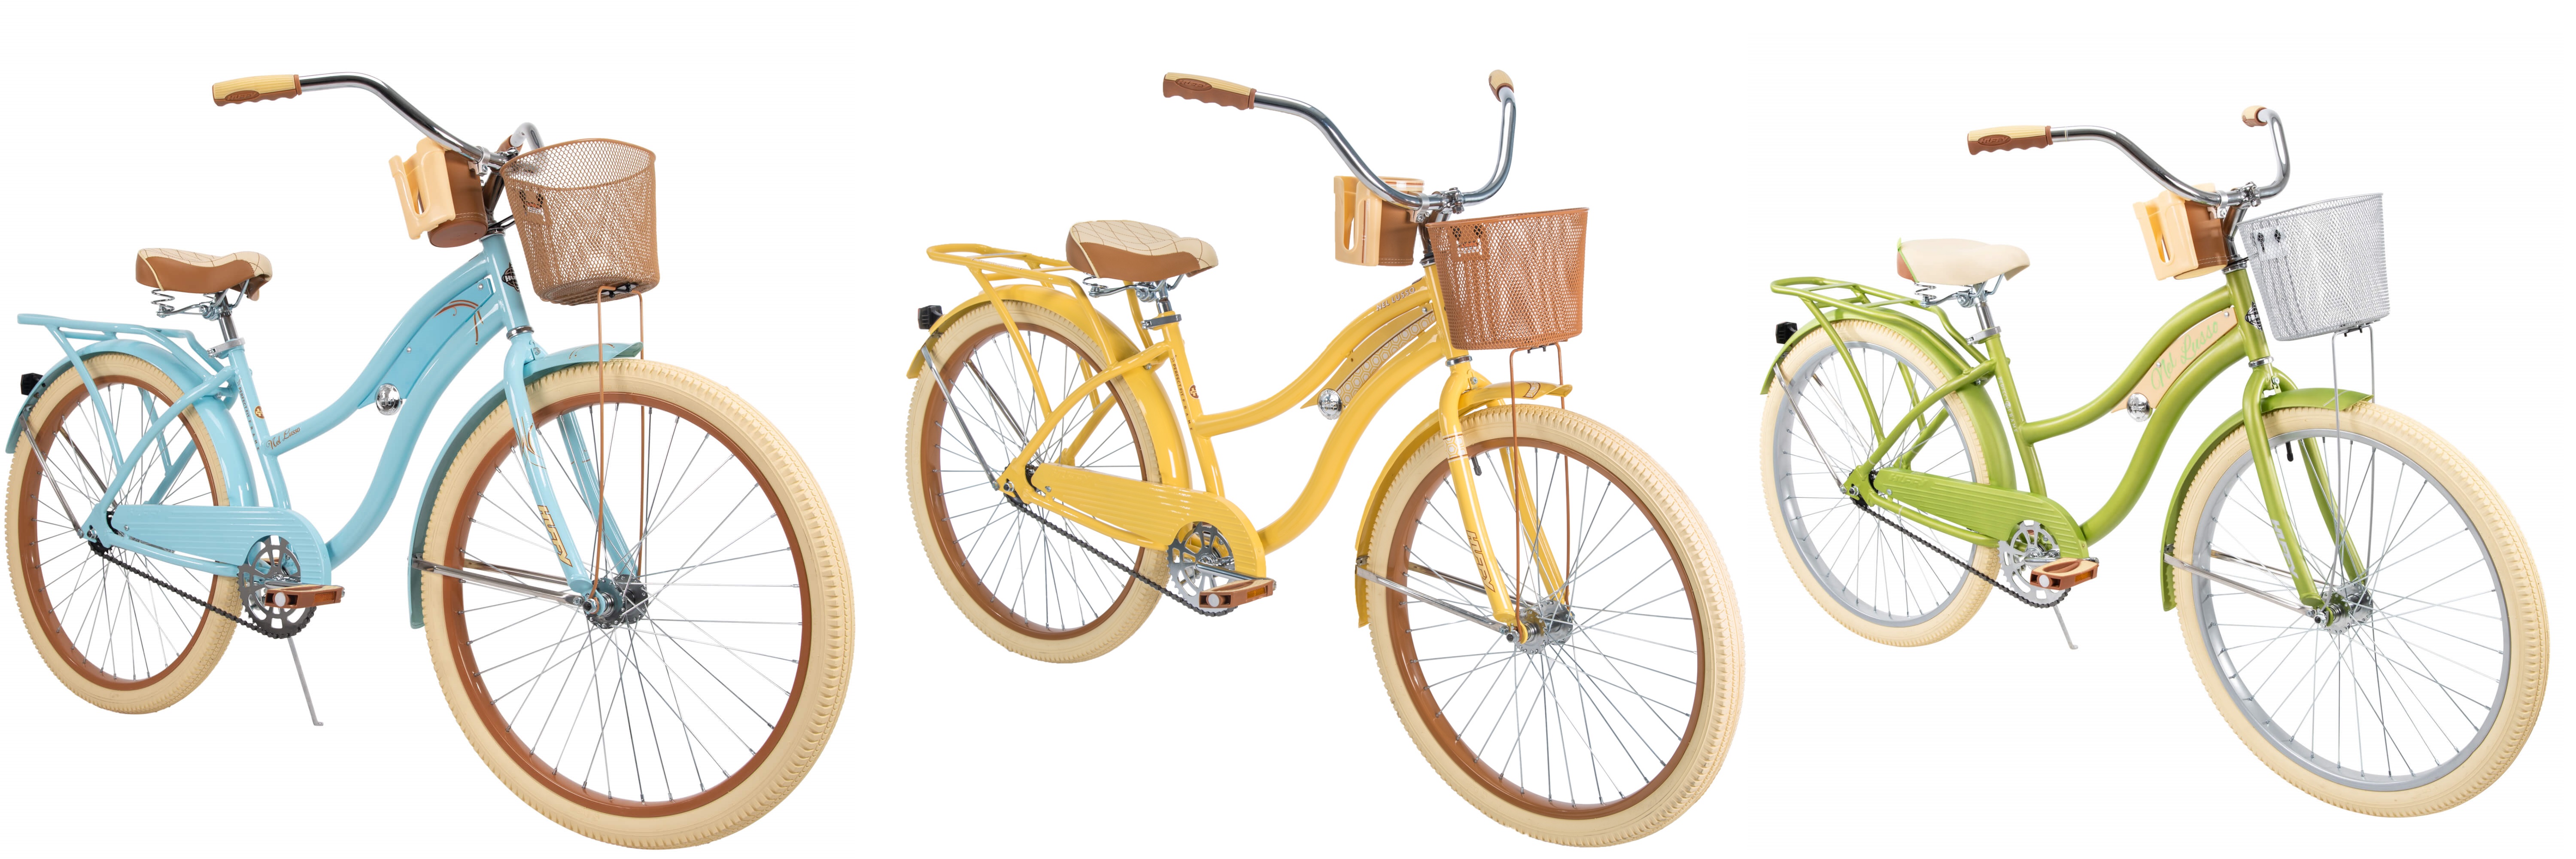 yellow cruiser bike with basket